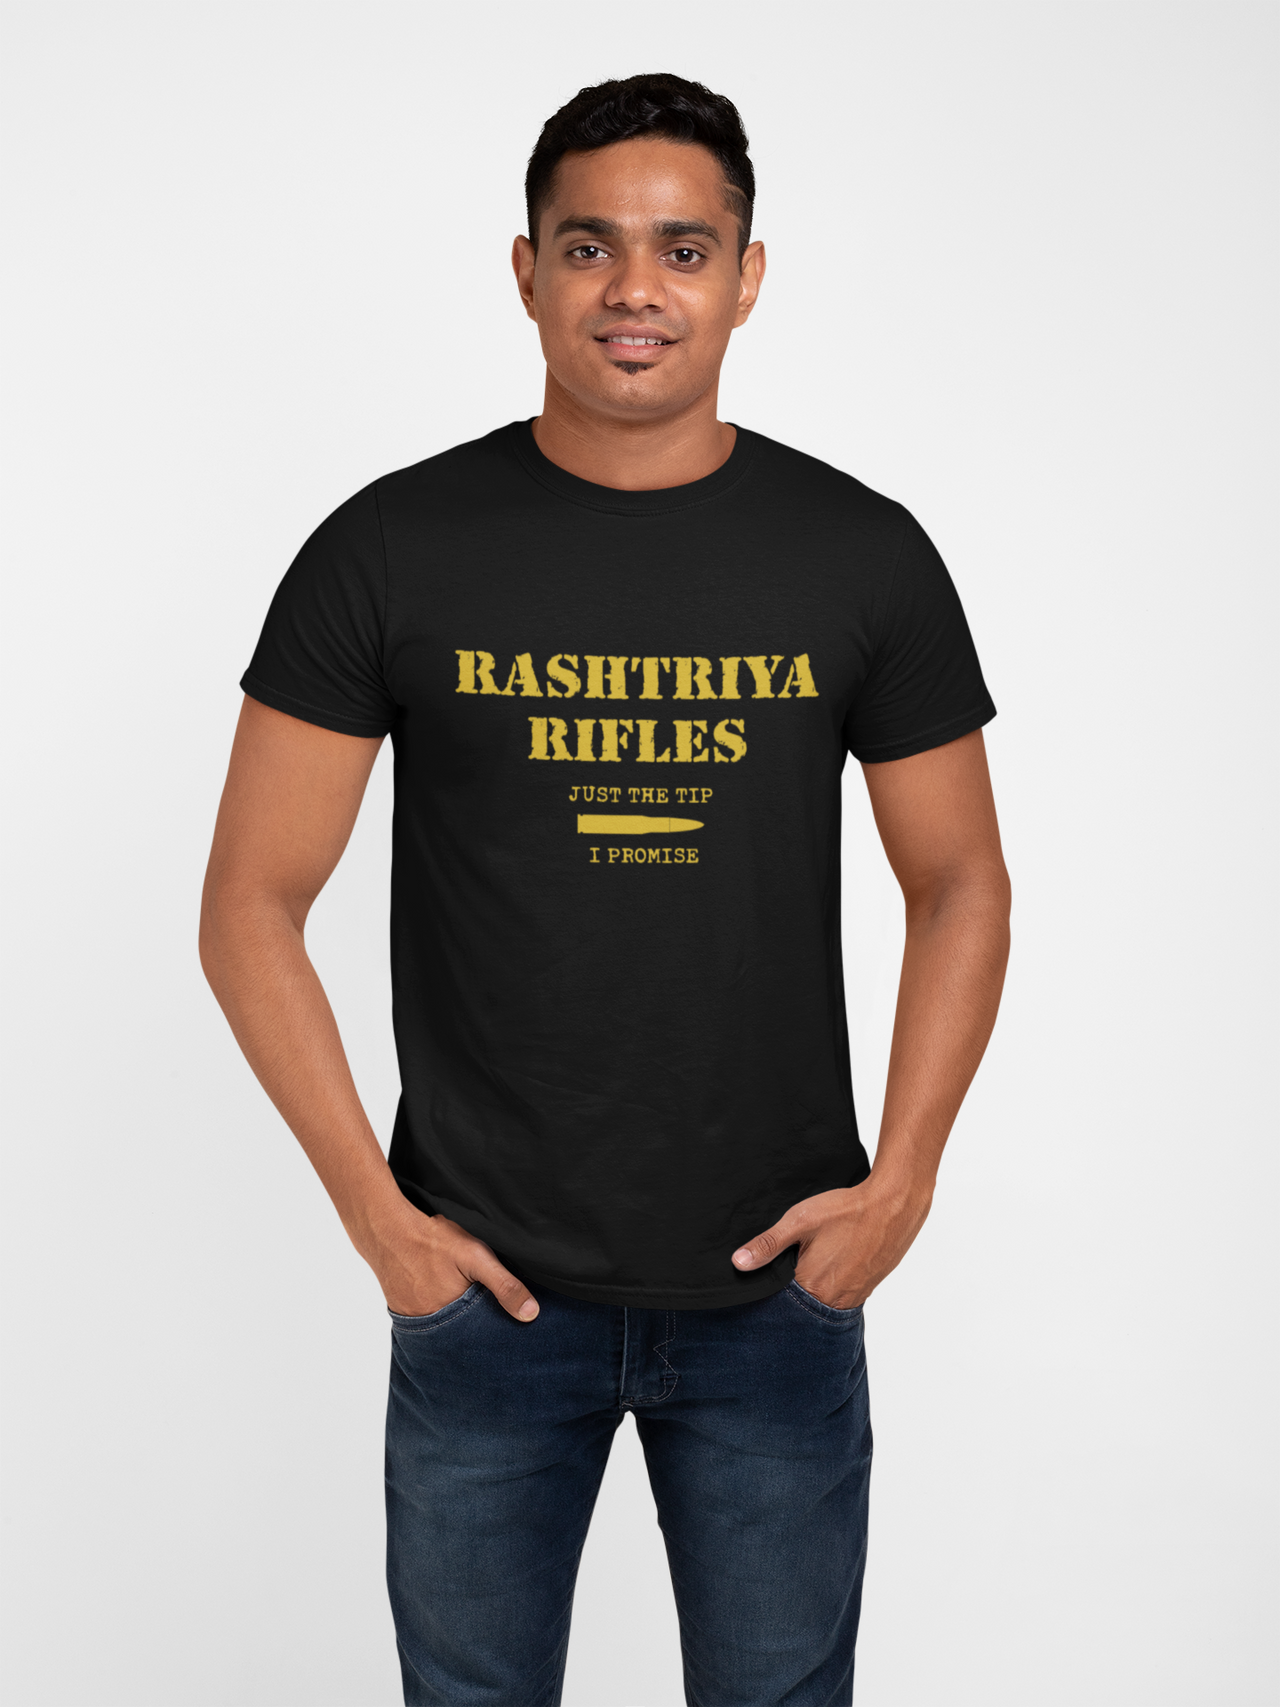 Rashtriya Rifles T-shirt - RR Just the Tip, I Promise ( Men)